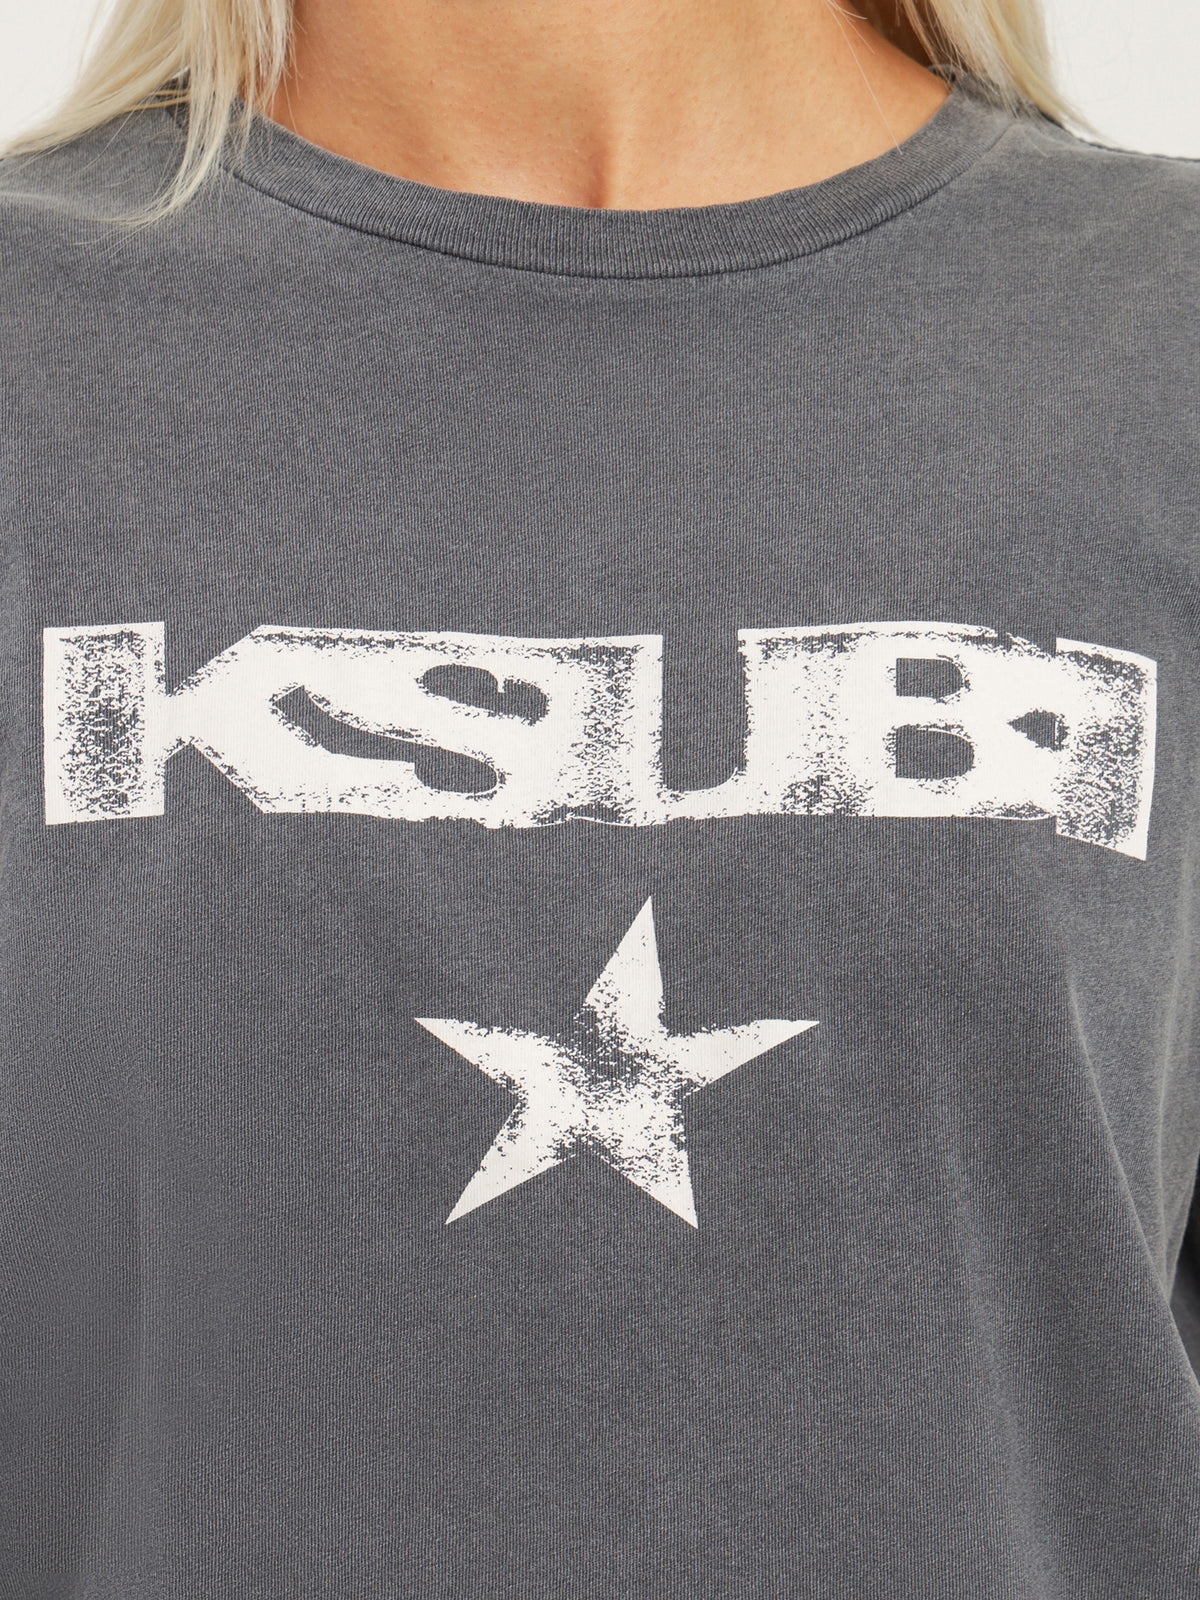 Sott Star Klassic Short Sleeve T-Shirt in Charcoal